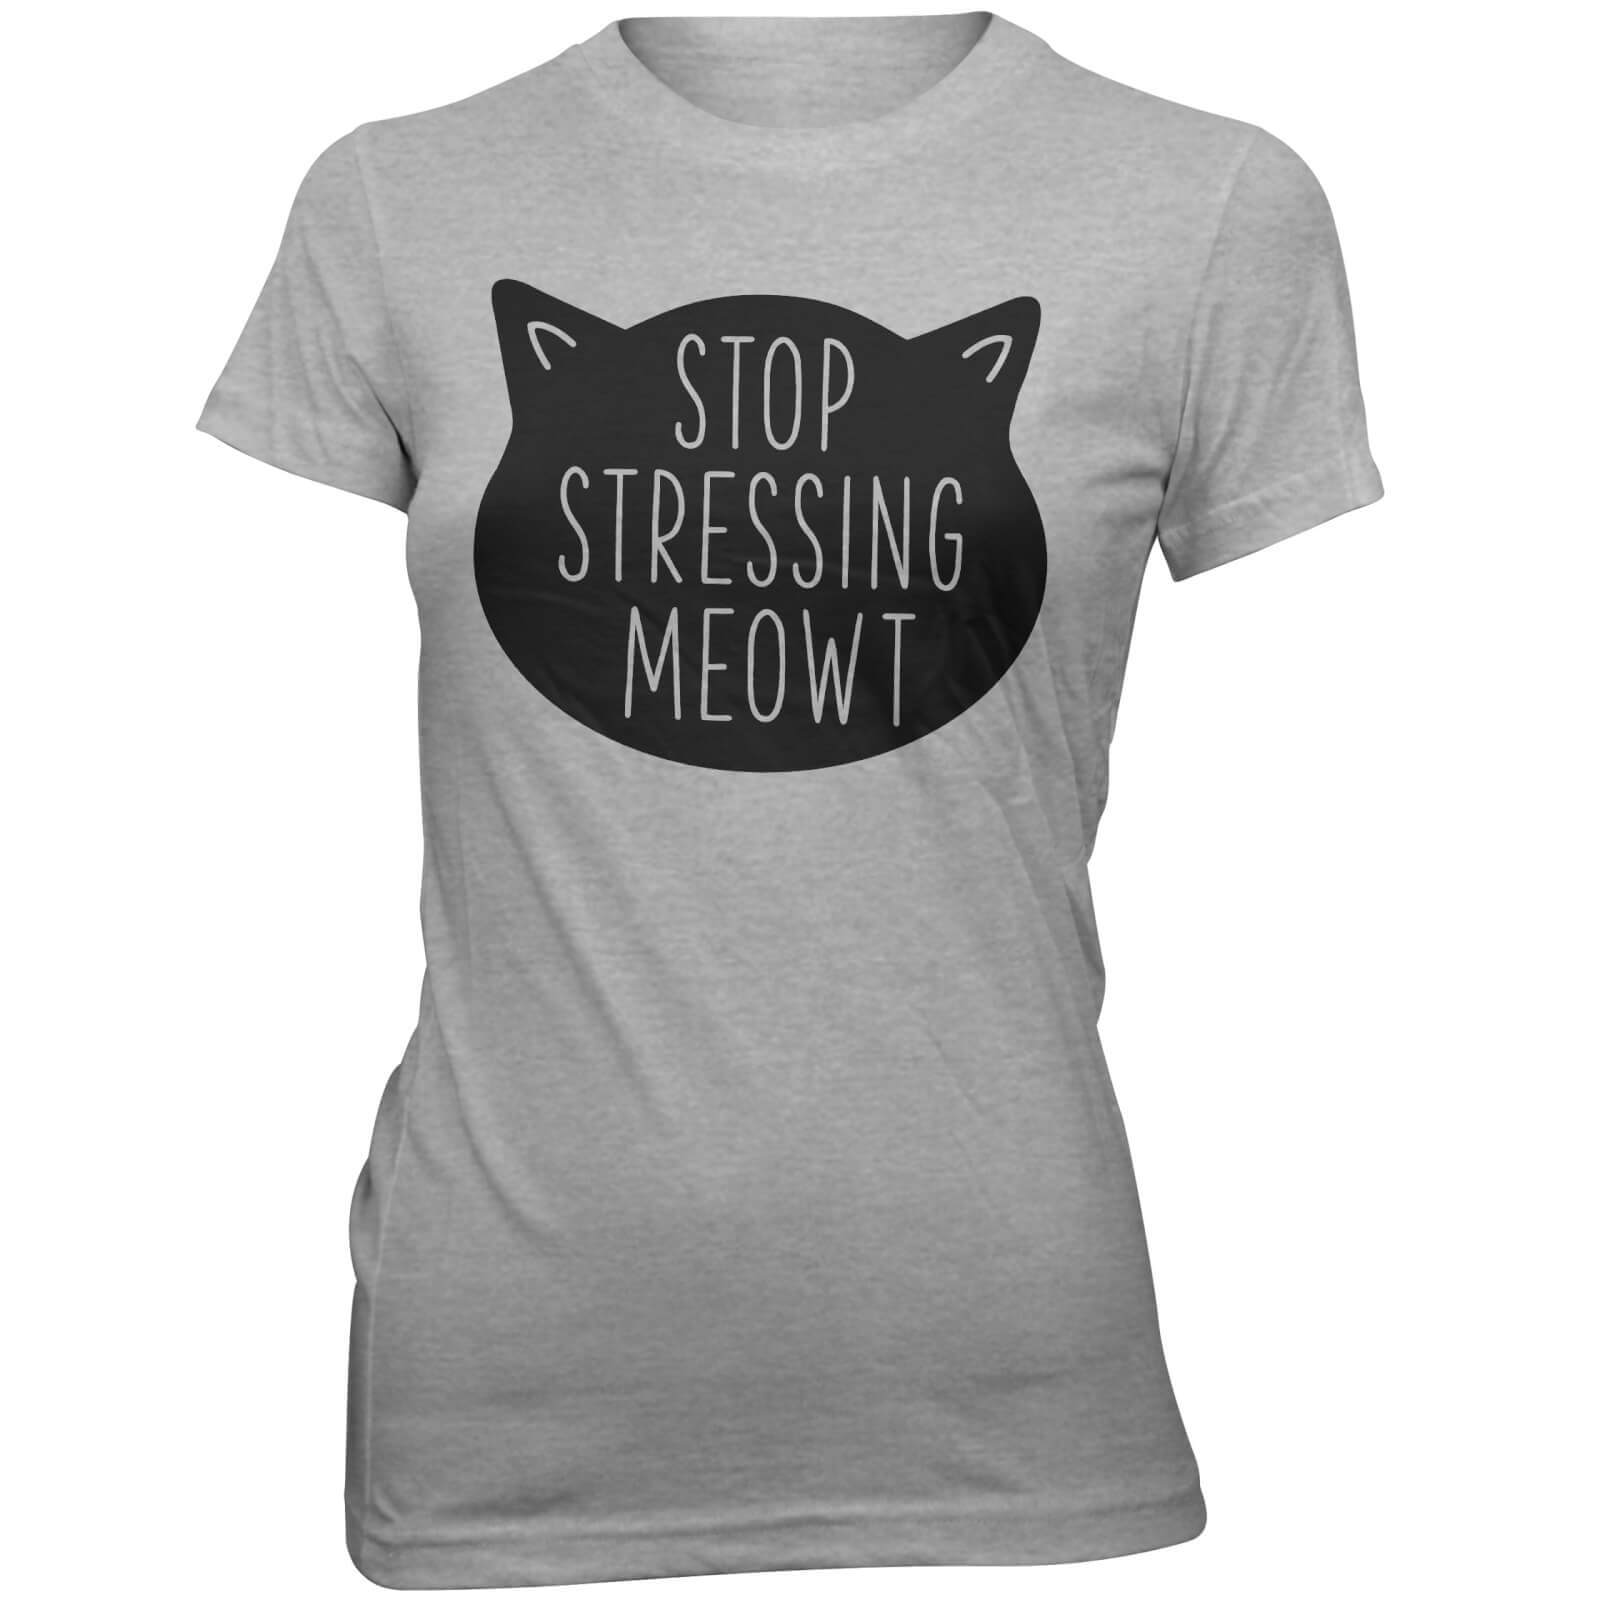 Stop Stressing Meowt Women's Slogan T-Shirt - S - Grey